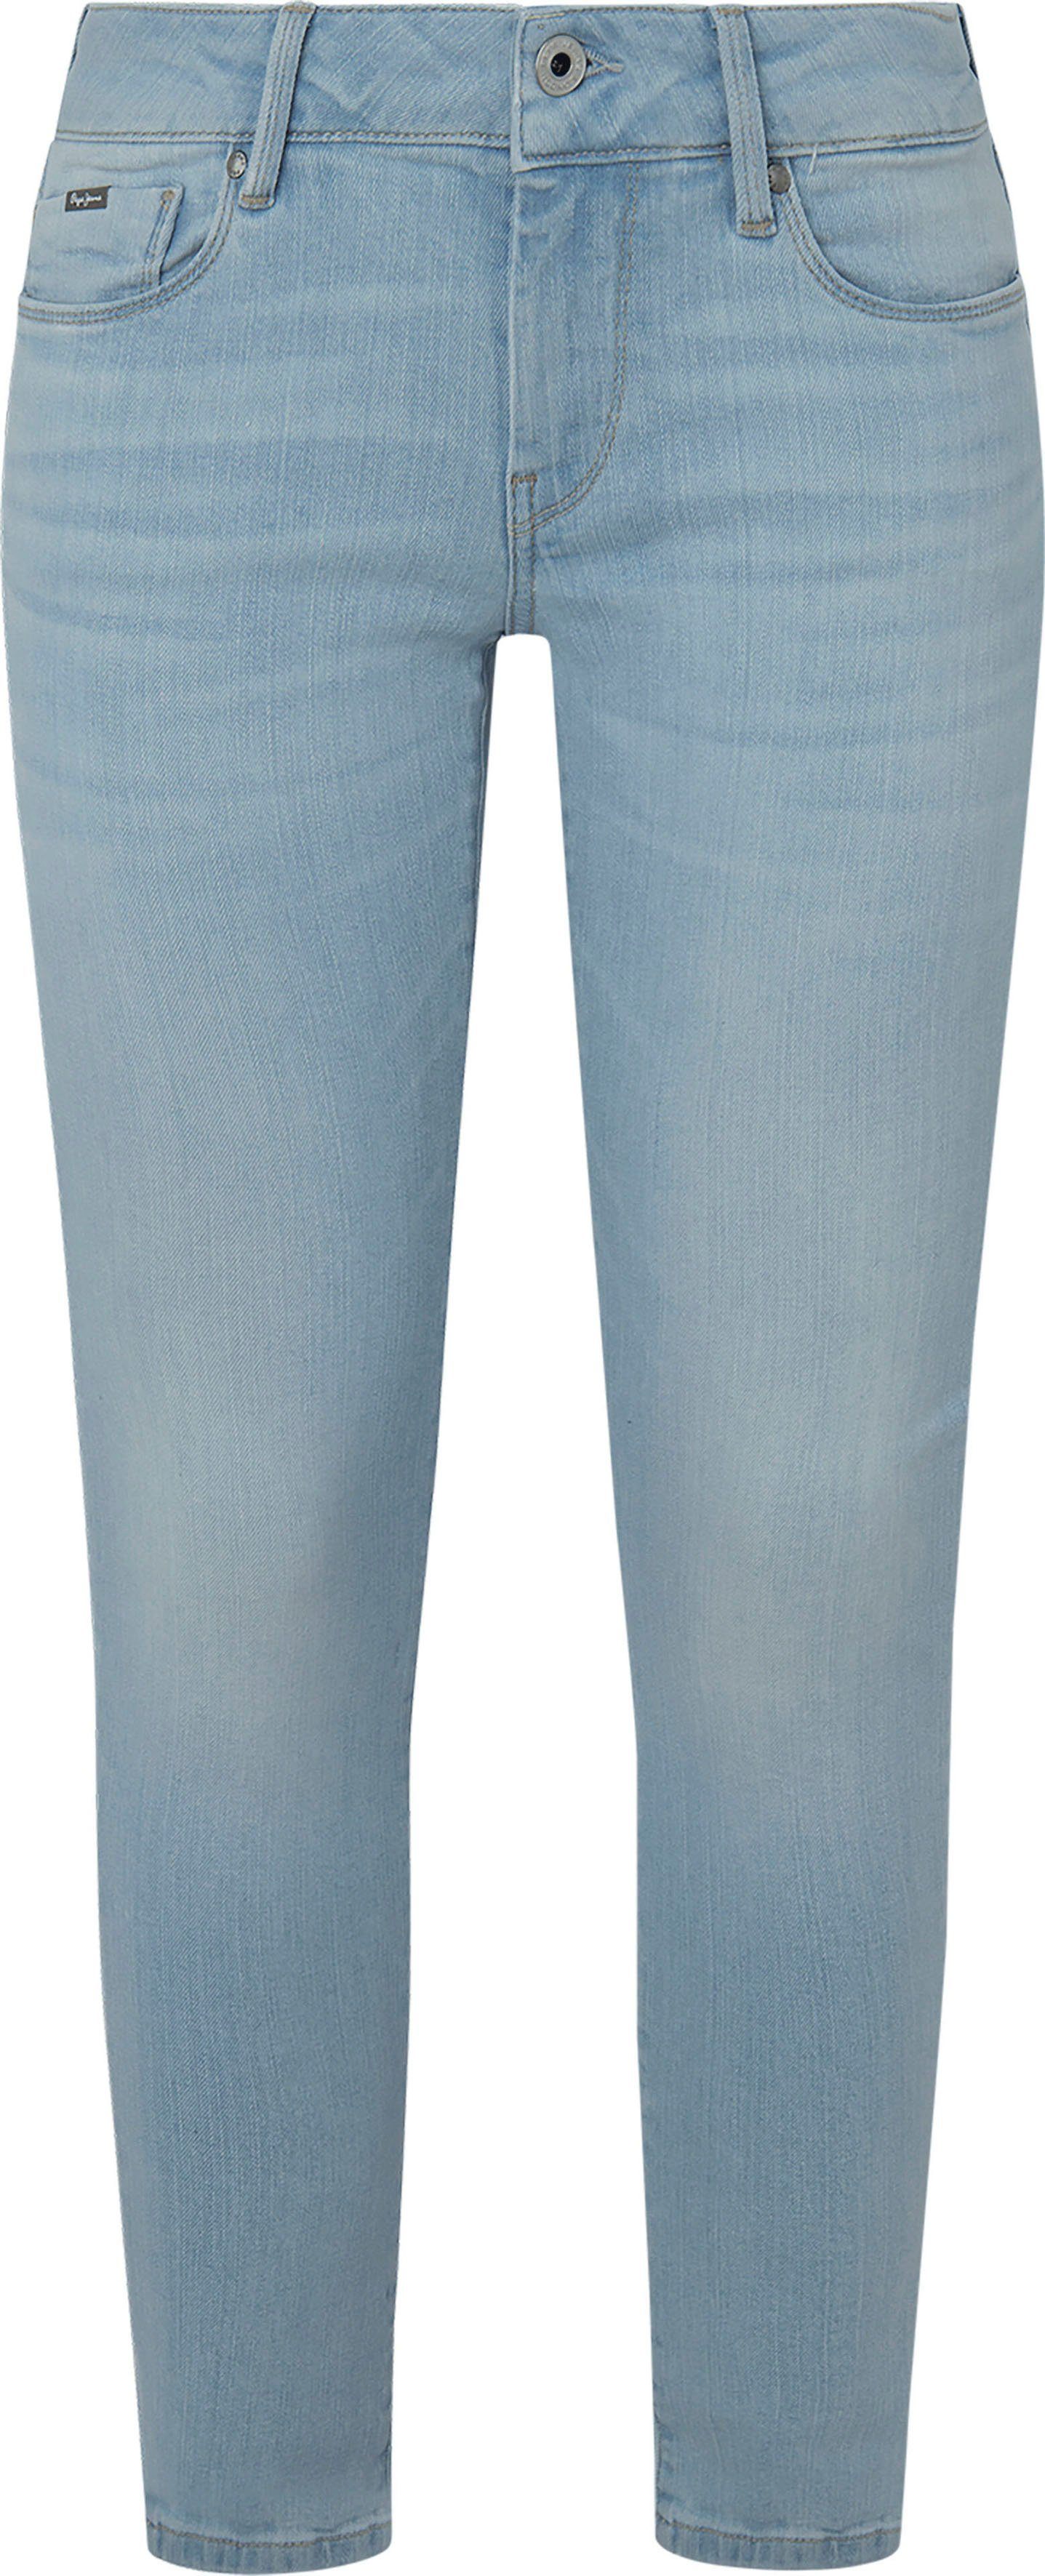 Pepe Jeans Skinny-fit-Jeans SOHO im Stretch-Anteil mit hell 5-Pocket-Stil Bund und 1-Knopf